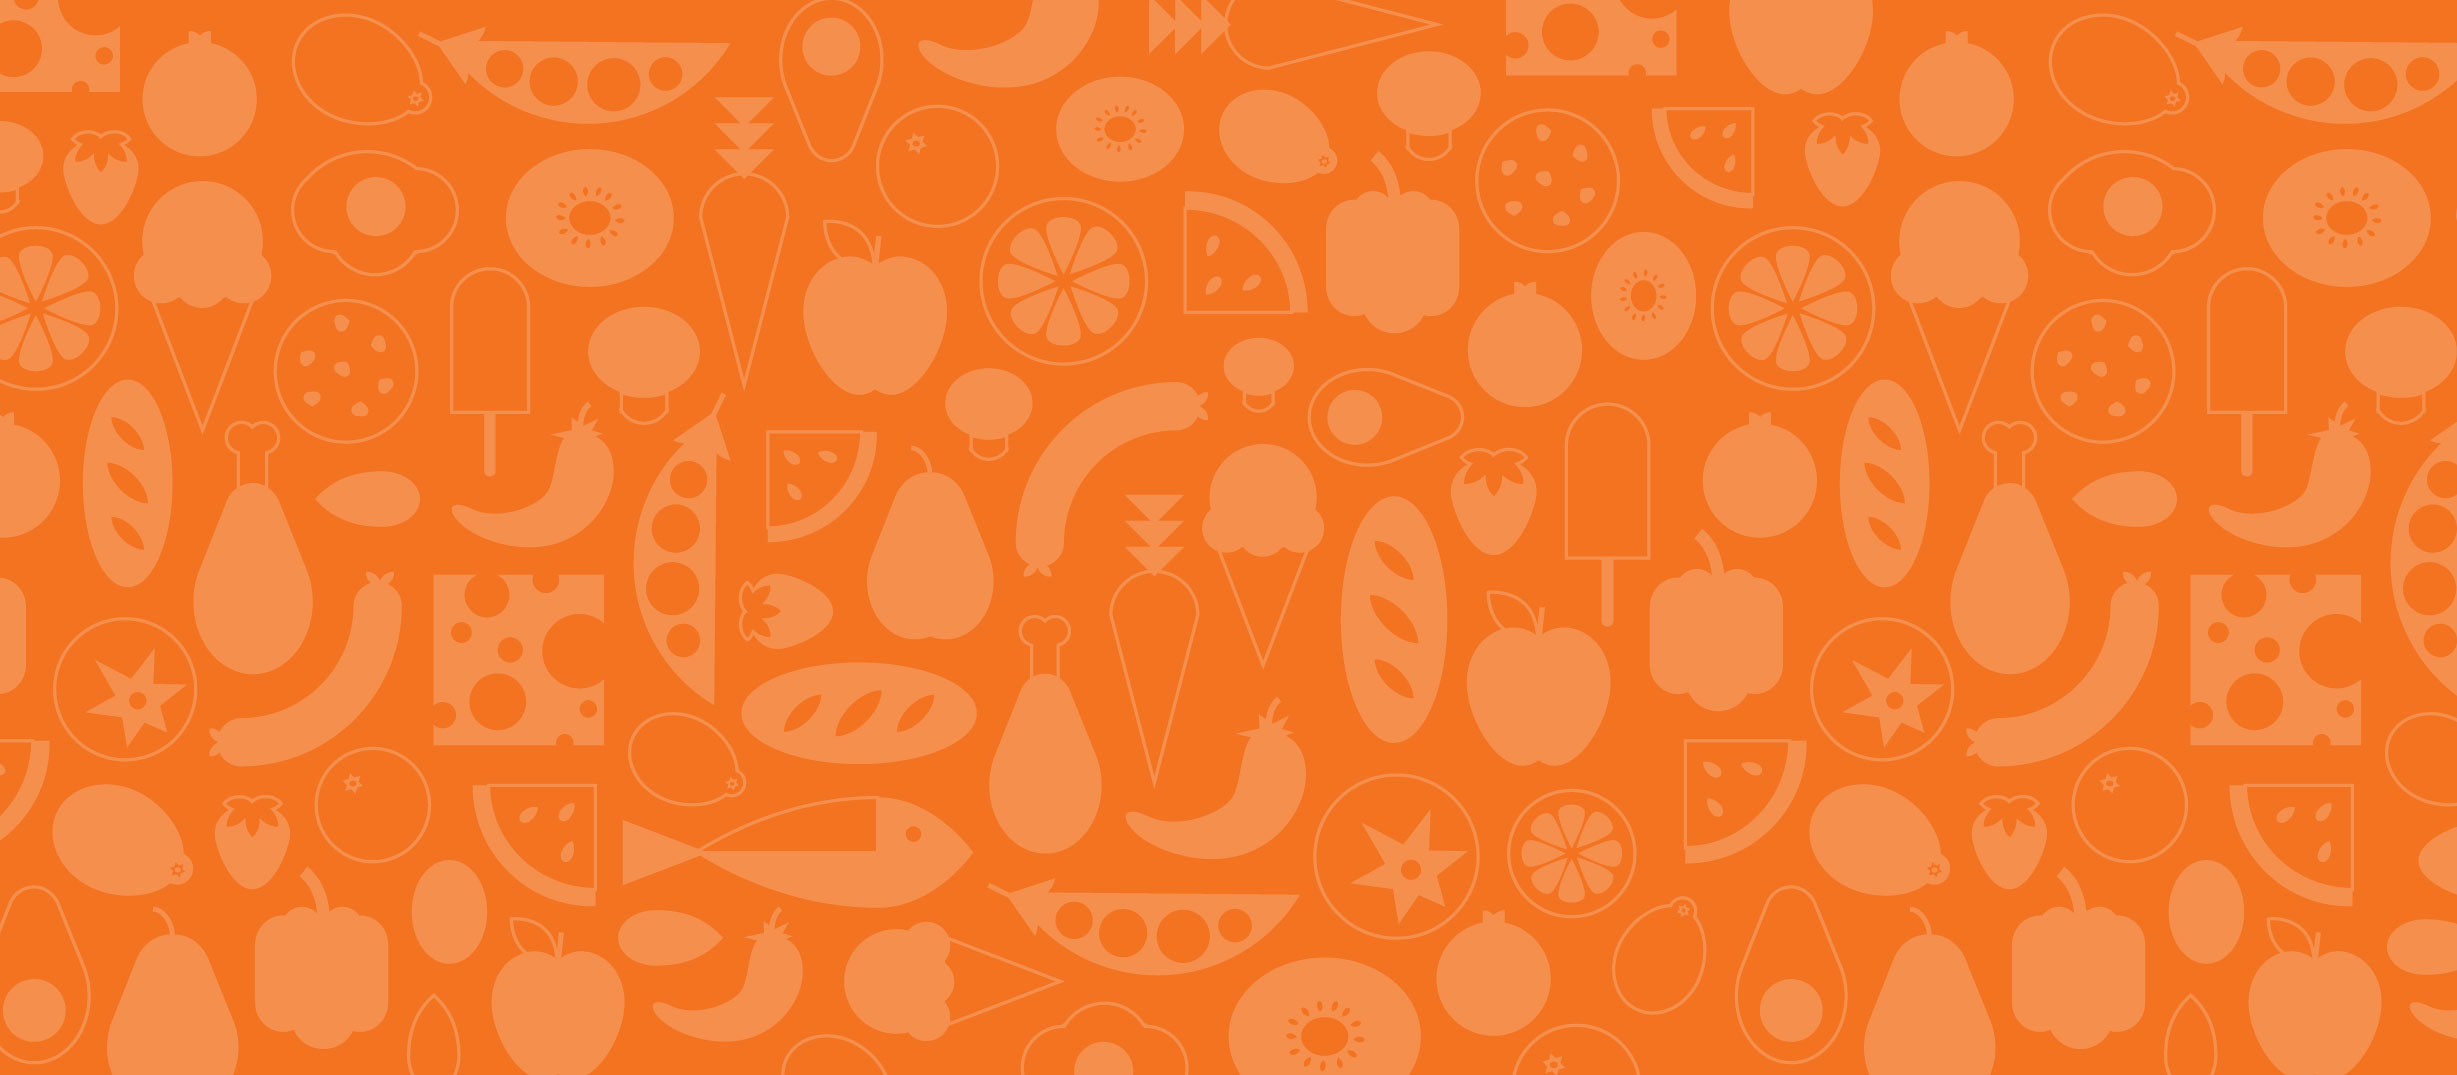 Various orange fruit graphics on a darker orange background.